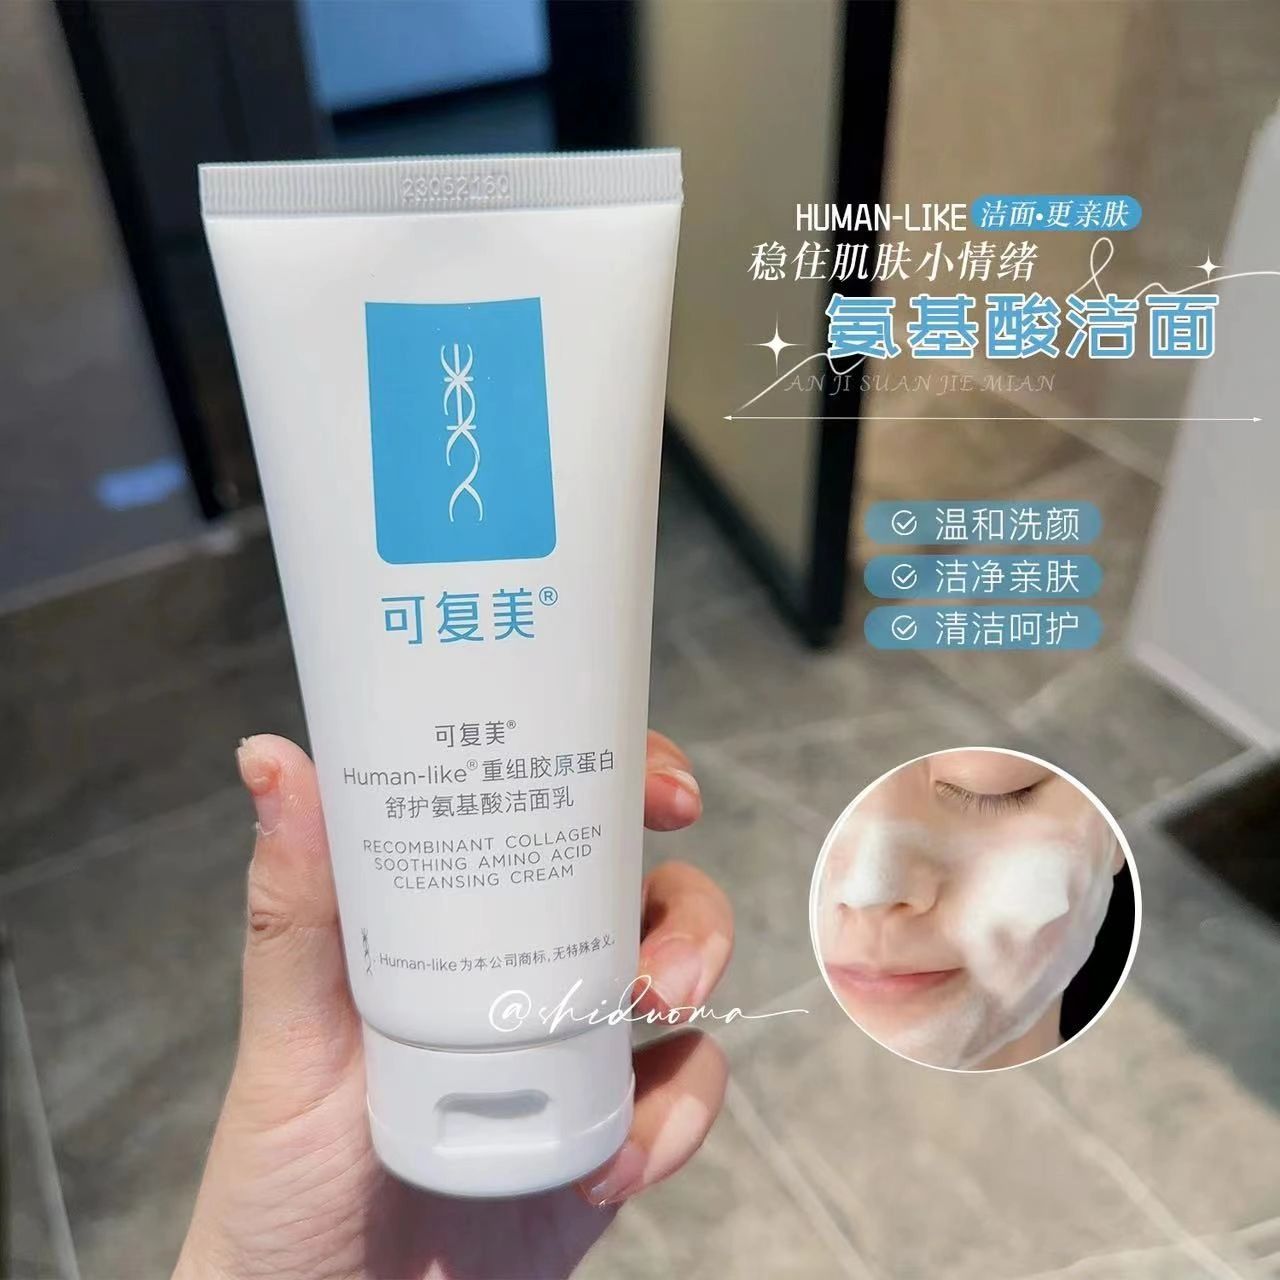 Kefumei Recombinant Collagen Soothing Amino Acid Cleansing Cream Face Wash 120g 可复美重组蛋白氨基酸洁面